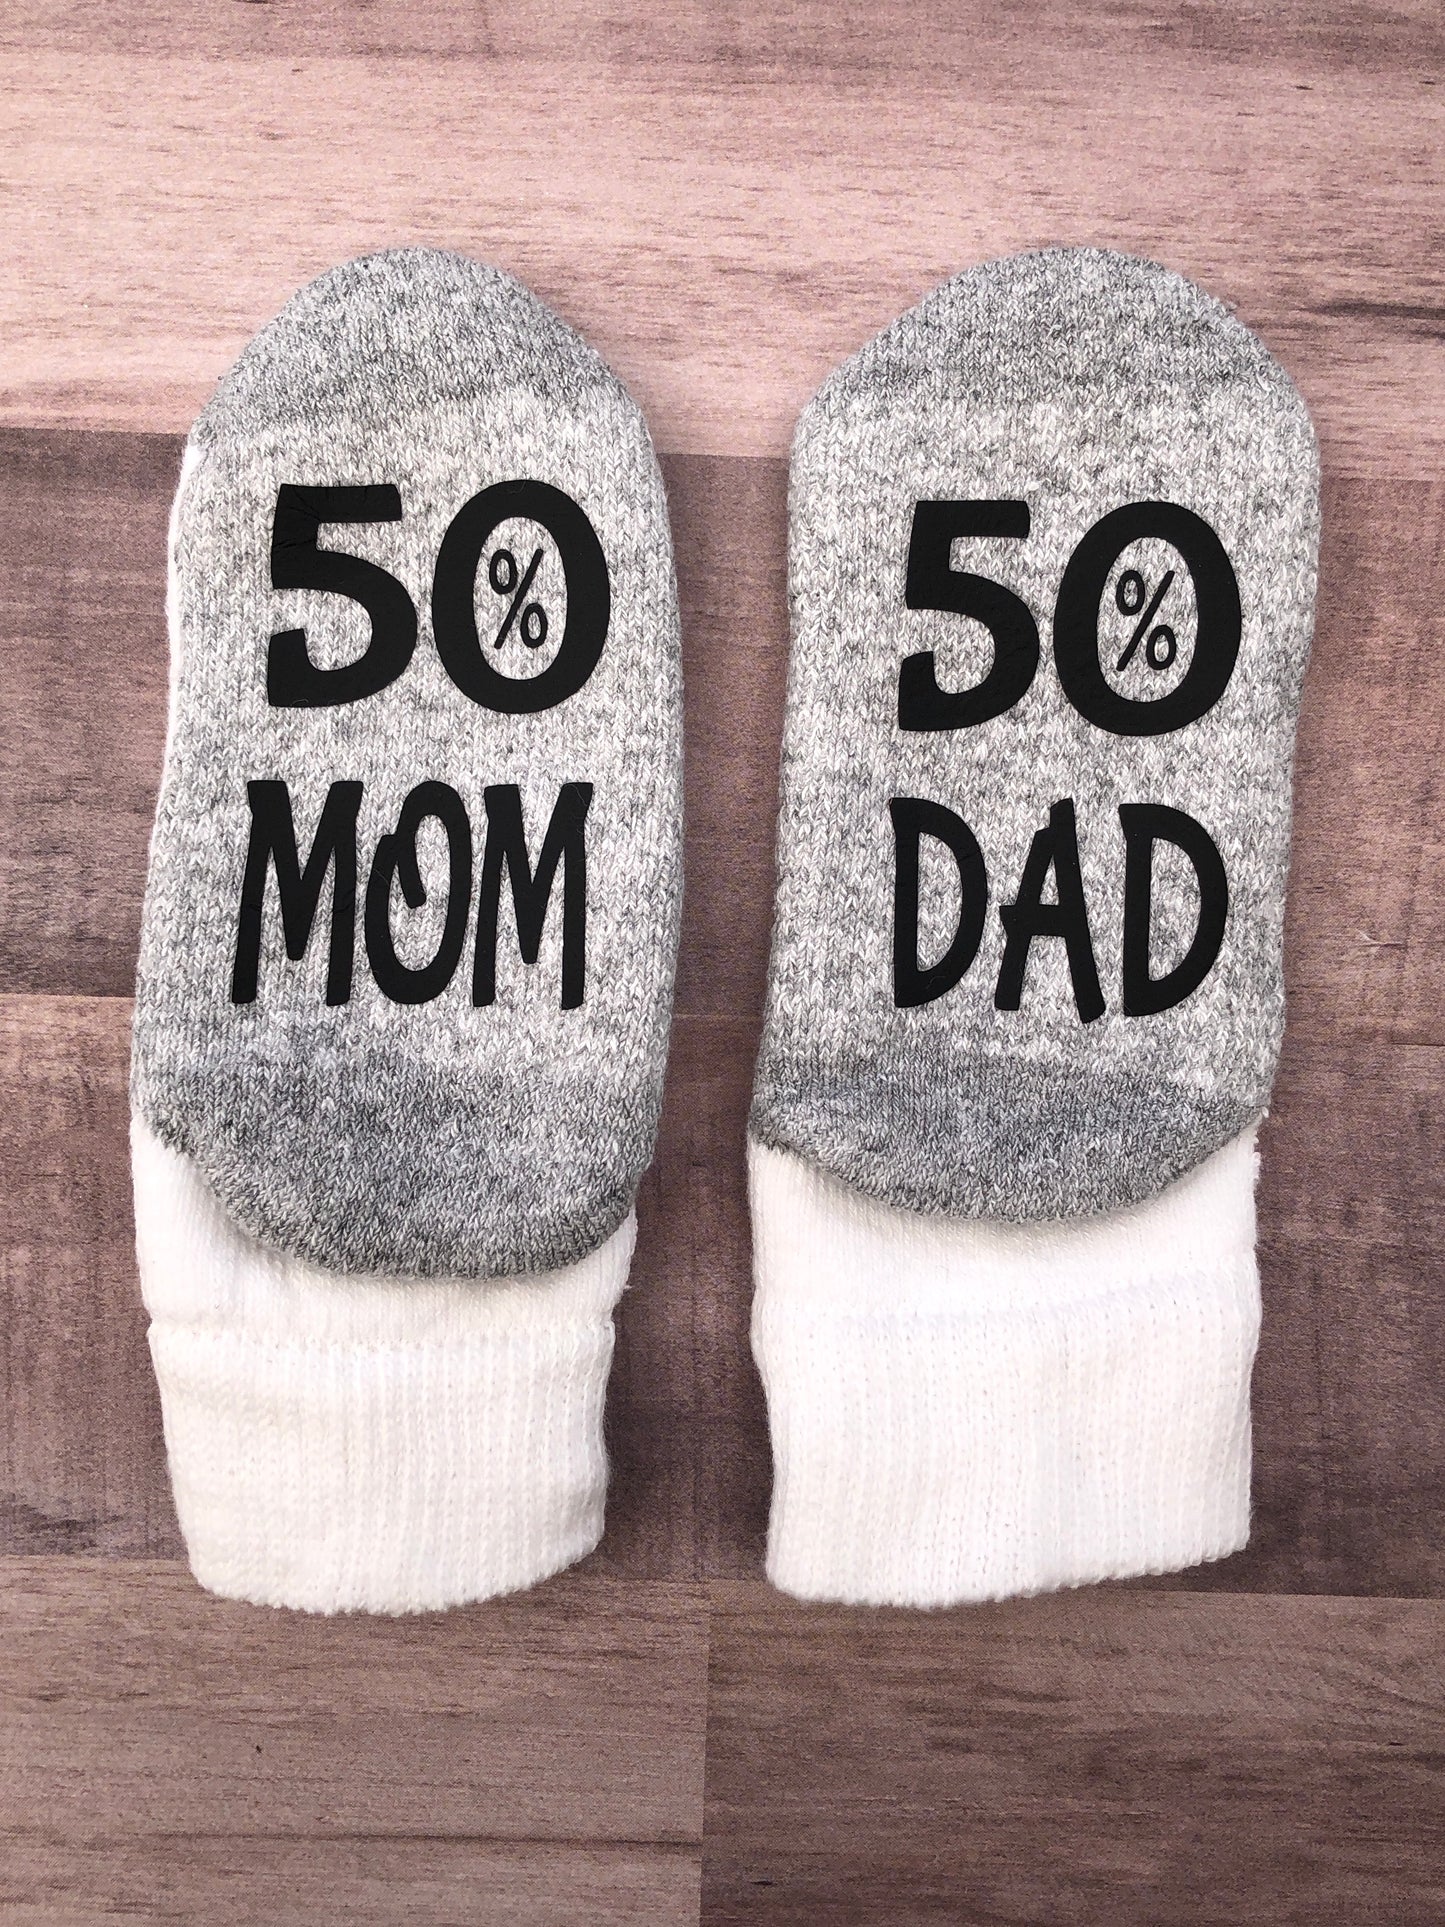 Toddler - 50% Mom & Dad